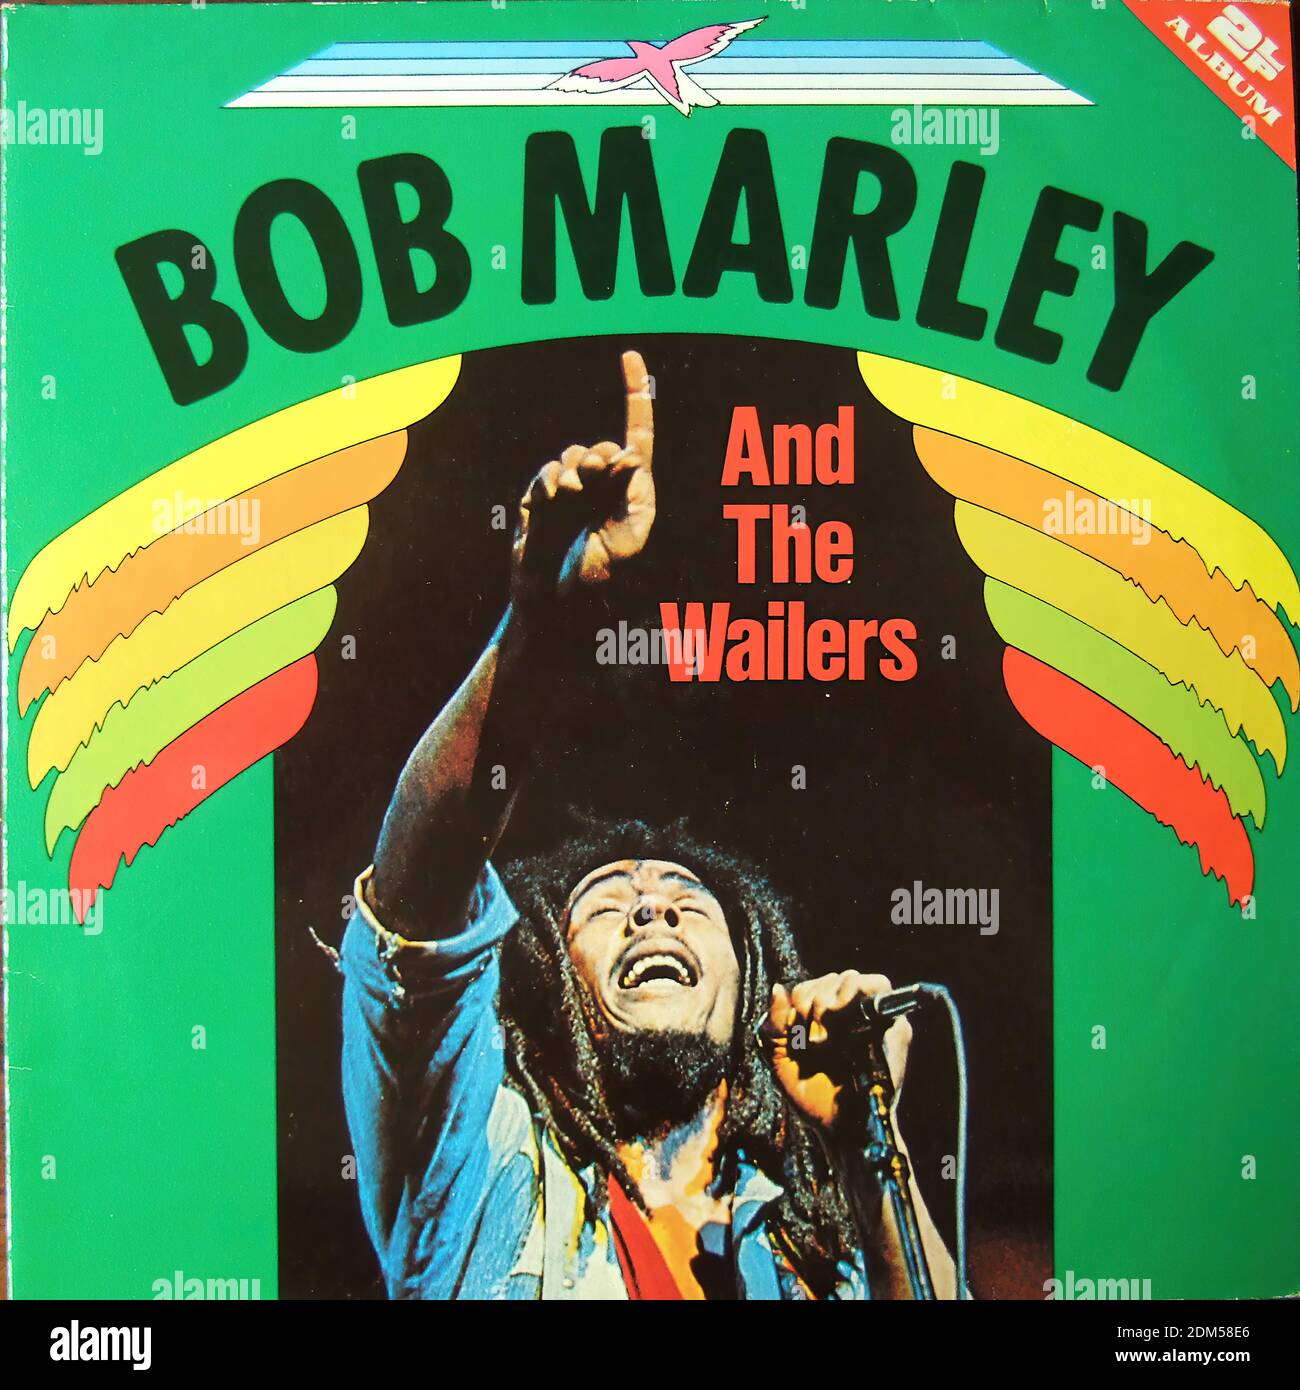 Bob Marley & The Wailers (2Lp) - Vintage vinyl album cover Stock Photo -  Alamy